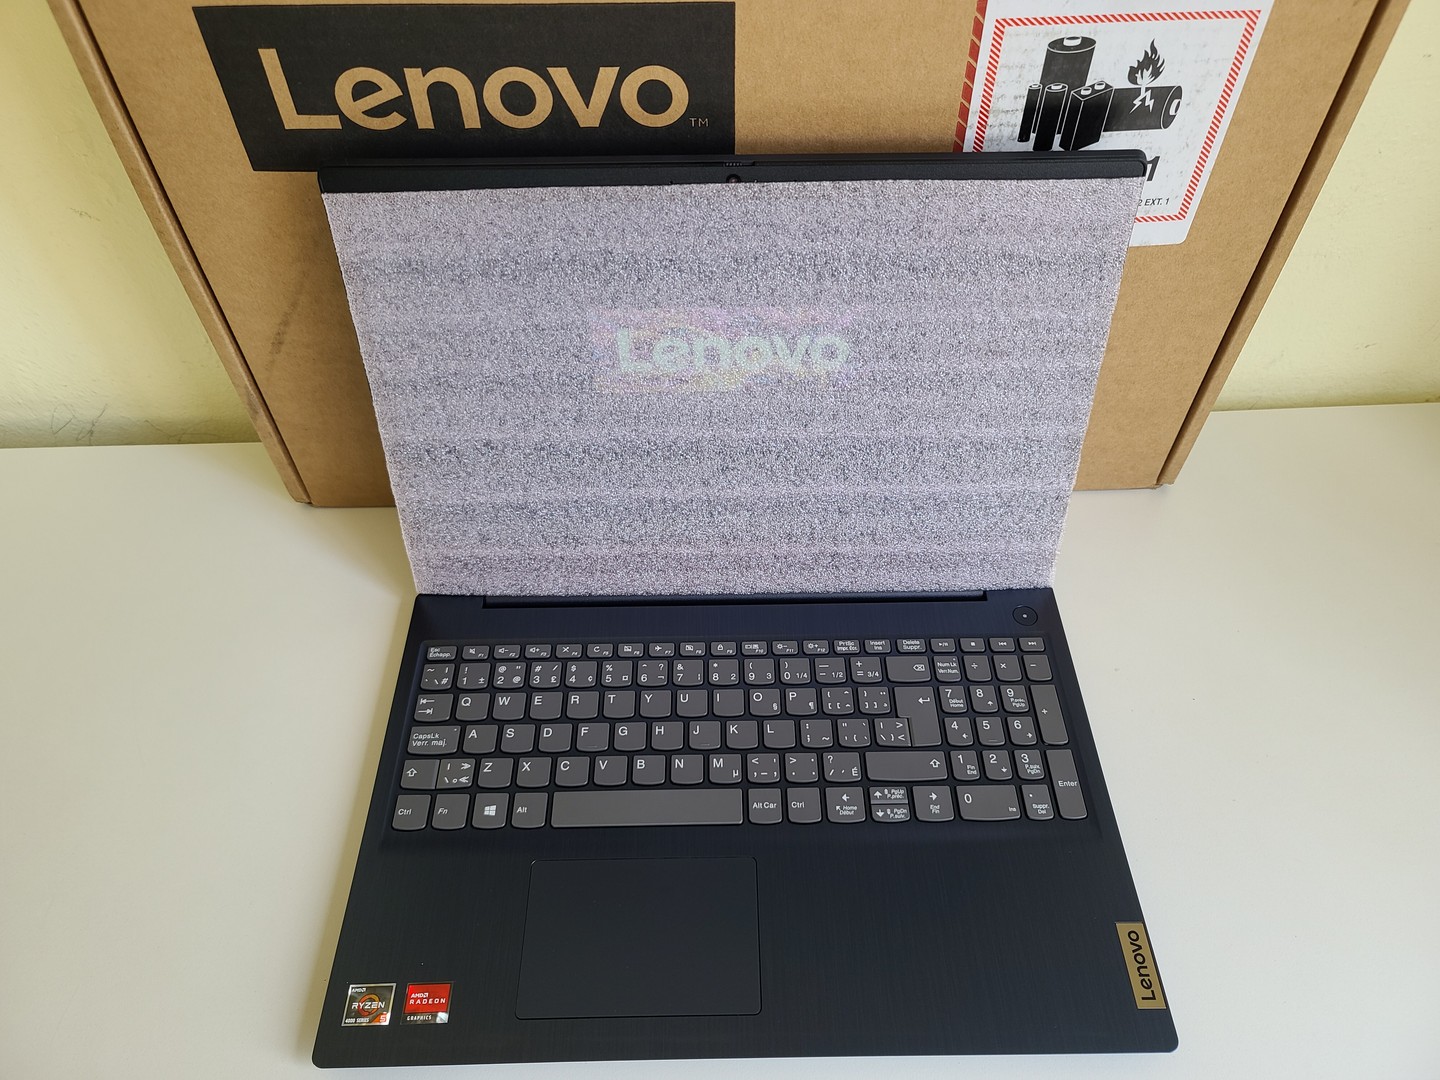 computadoras y laptops - Lenovo 15.6 FHD Ryzen 5 4500U Ram 8GB Disco 256GB M2. Windows 10